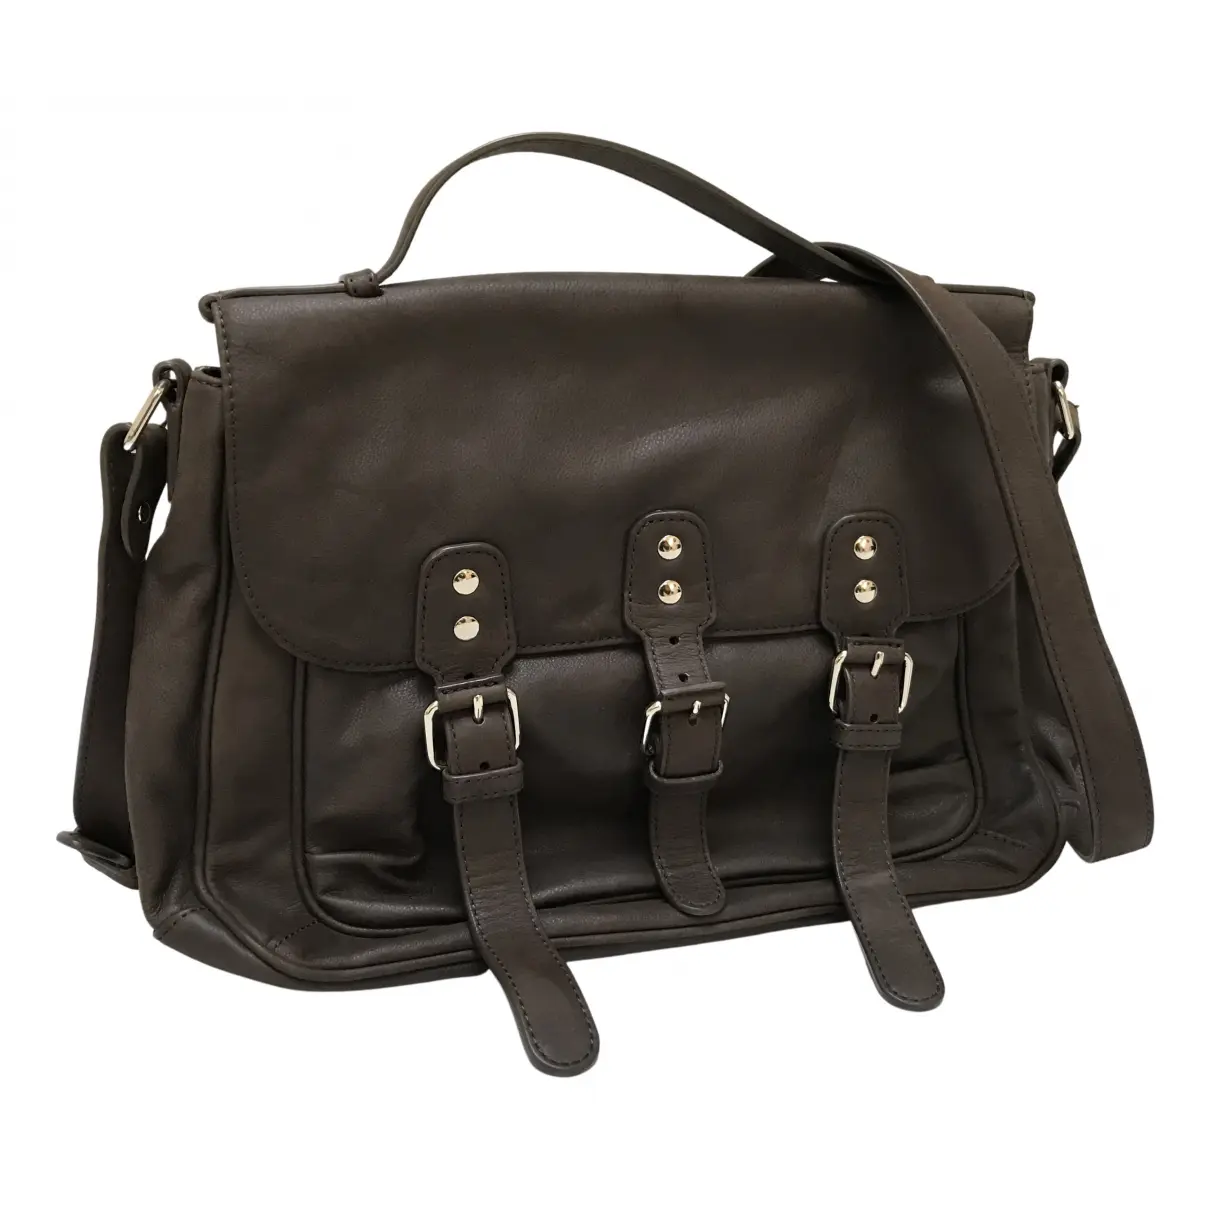 Leather handbag Vanessa Bruno